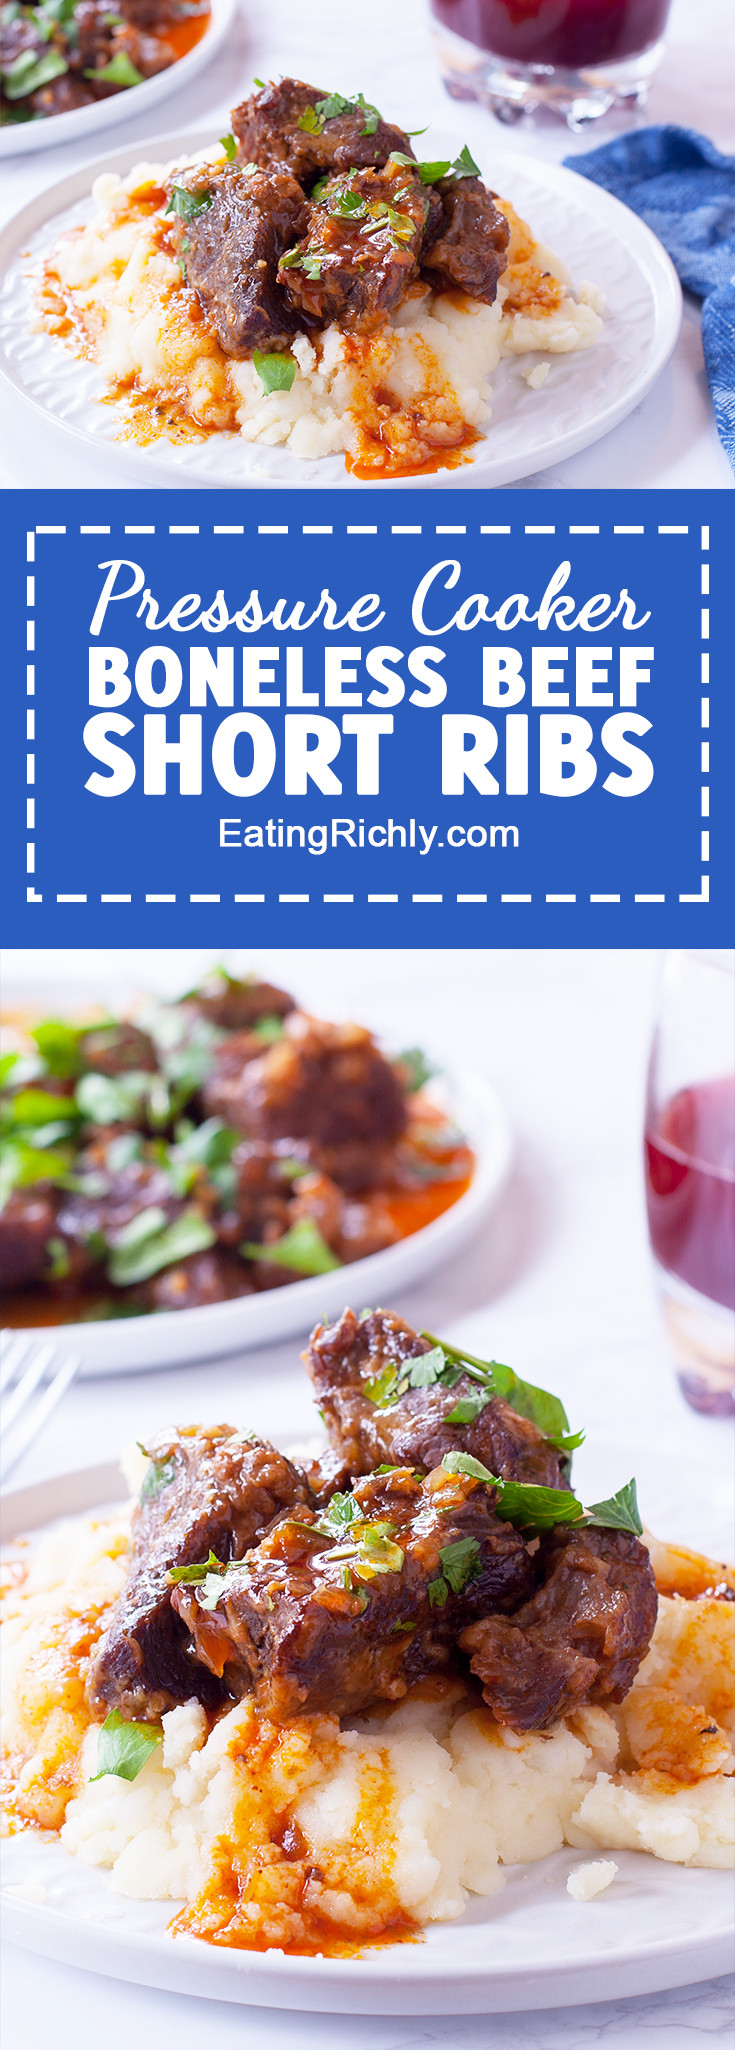 Boneless Beef Short Ribs Pressure Cooker
 Pressure Cooker Short Ribs in Under an Hour Eating Richly